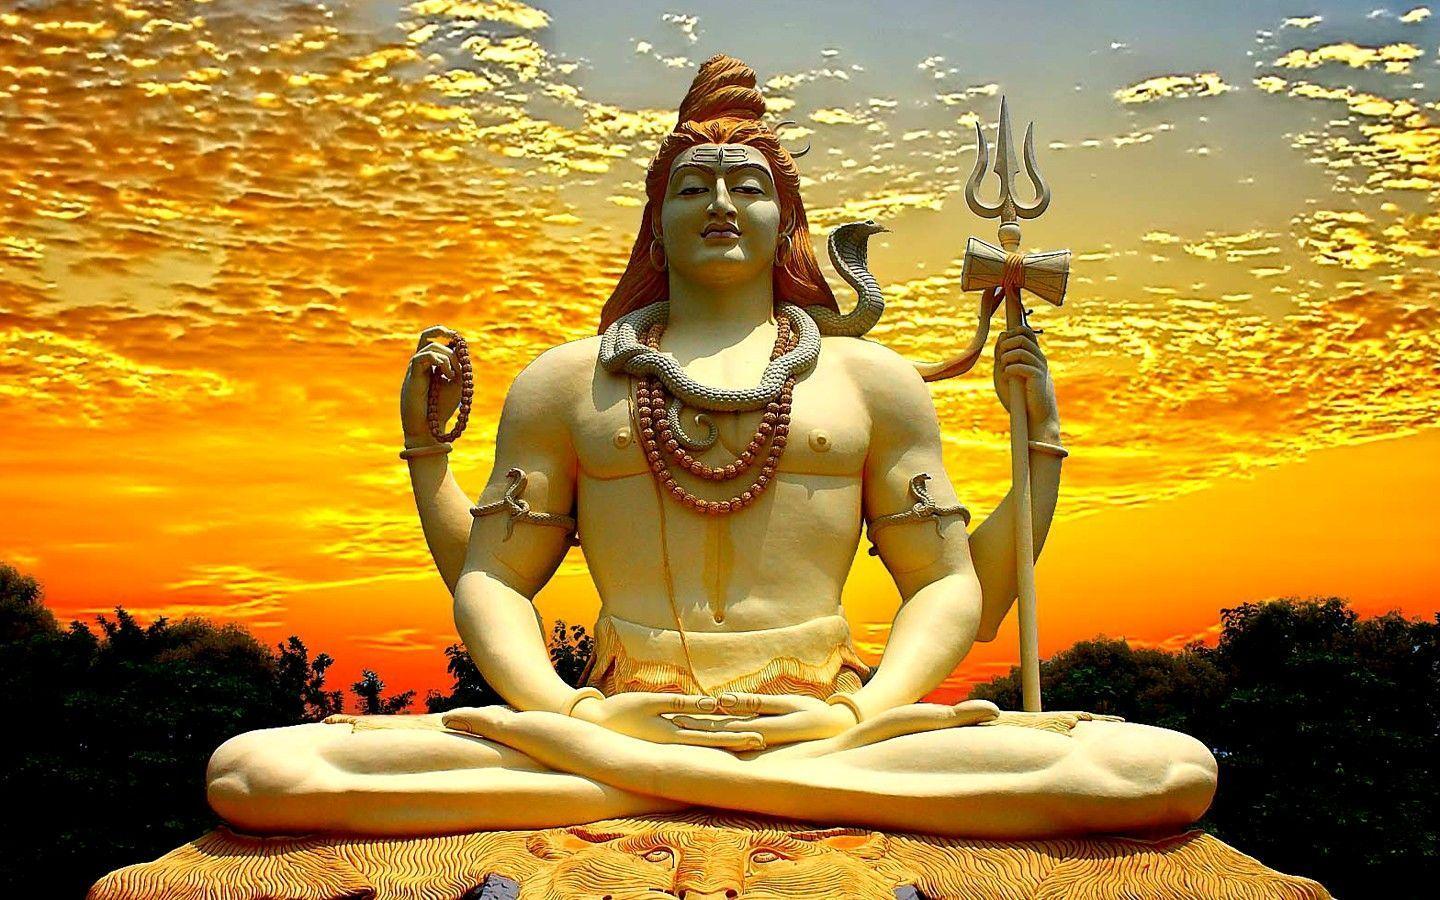 Lord Shiva Image, Lord Shiva Photo, Hindu God Shiva HD Wallpaper